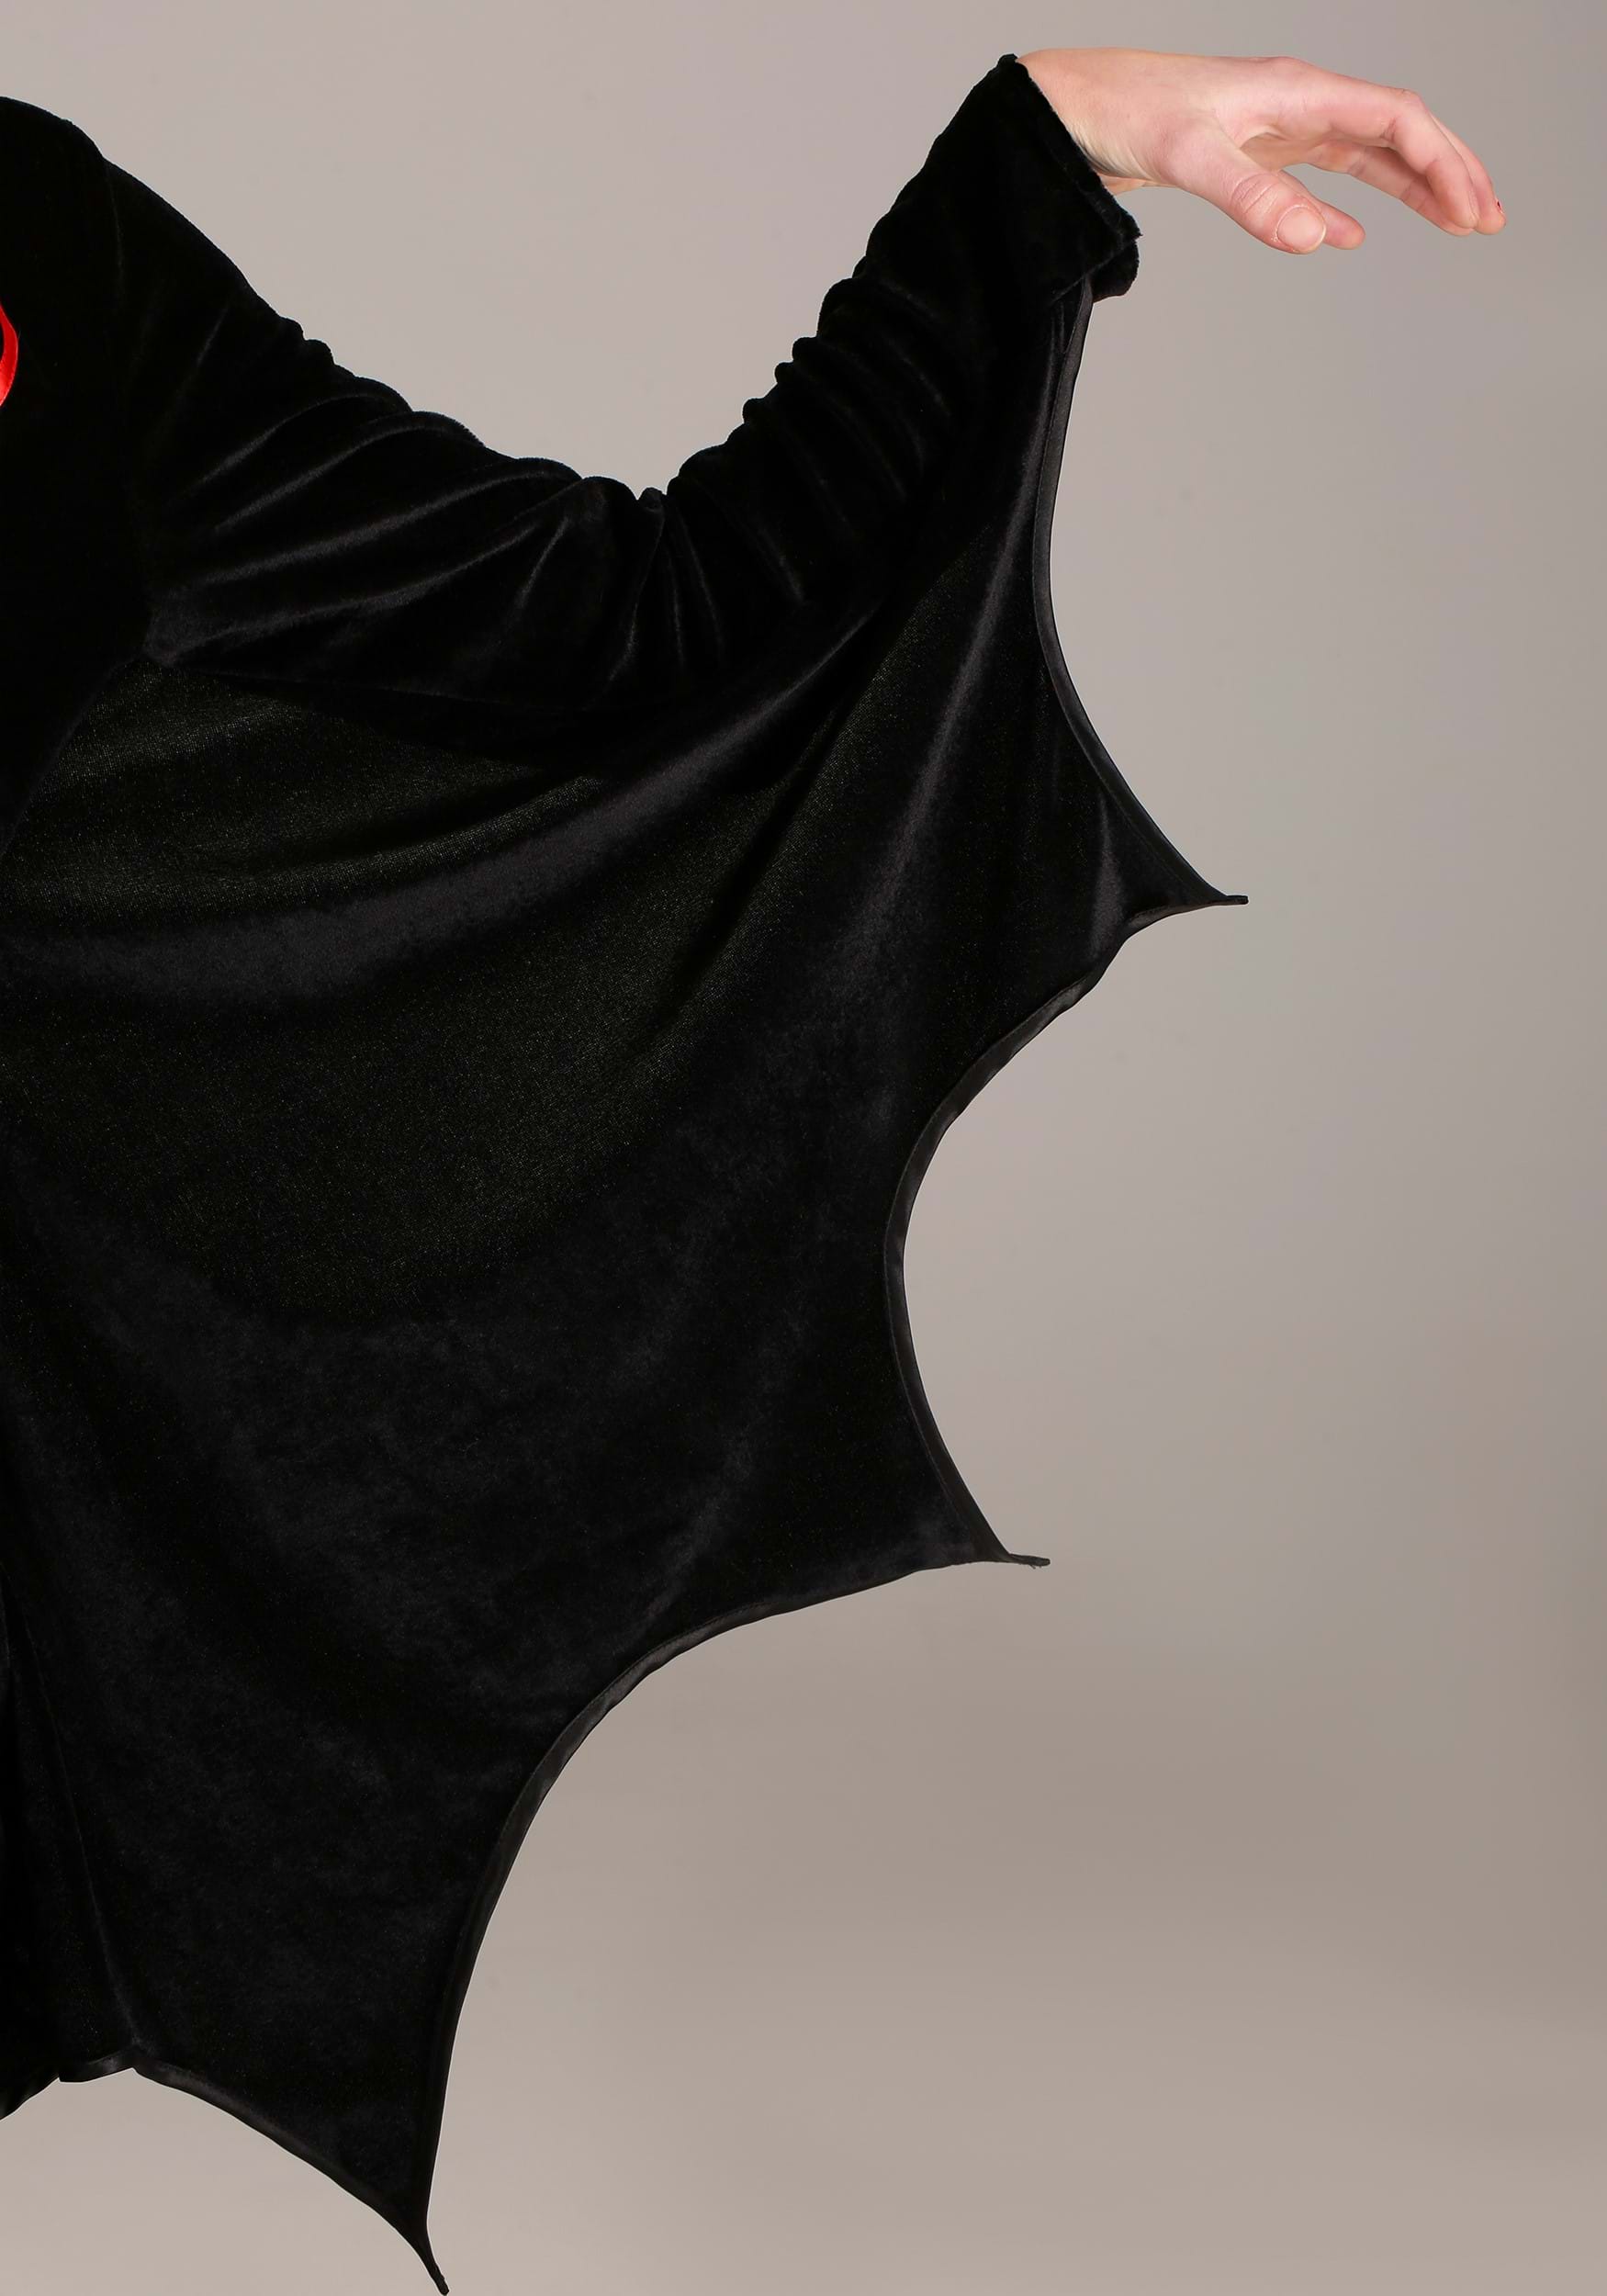 Lady Dracula Costume For Women